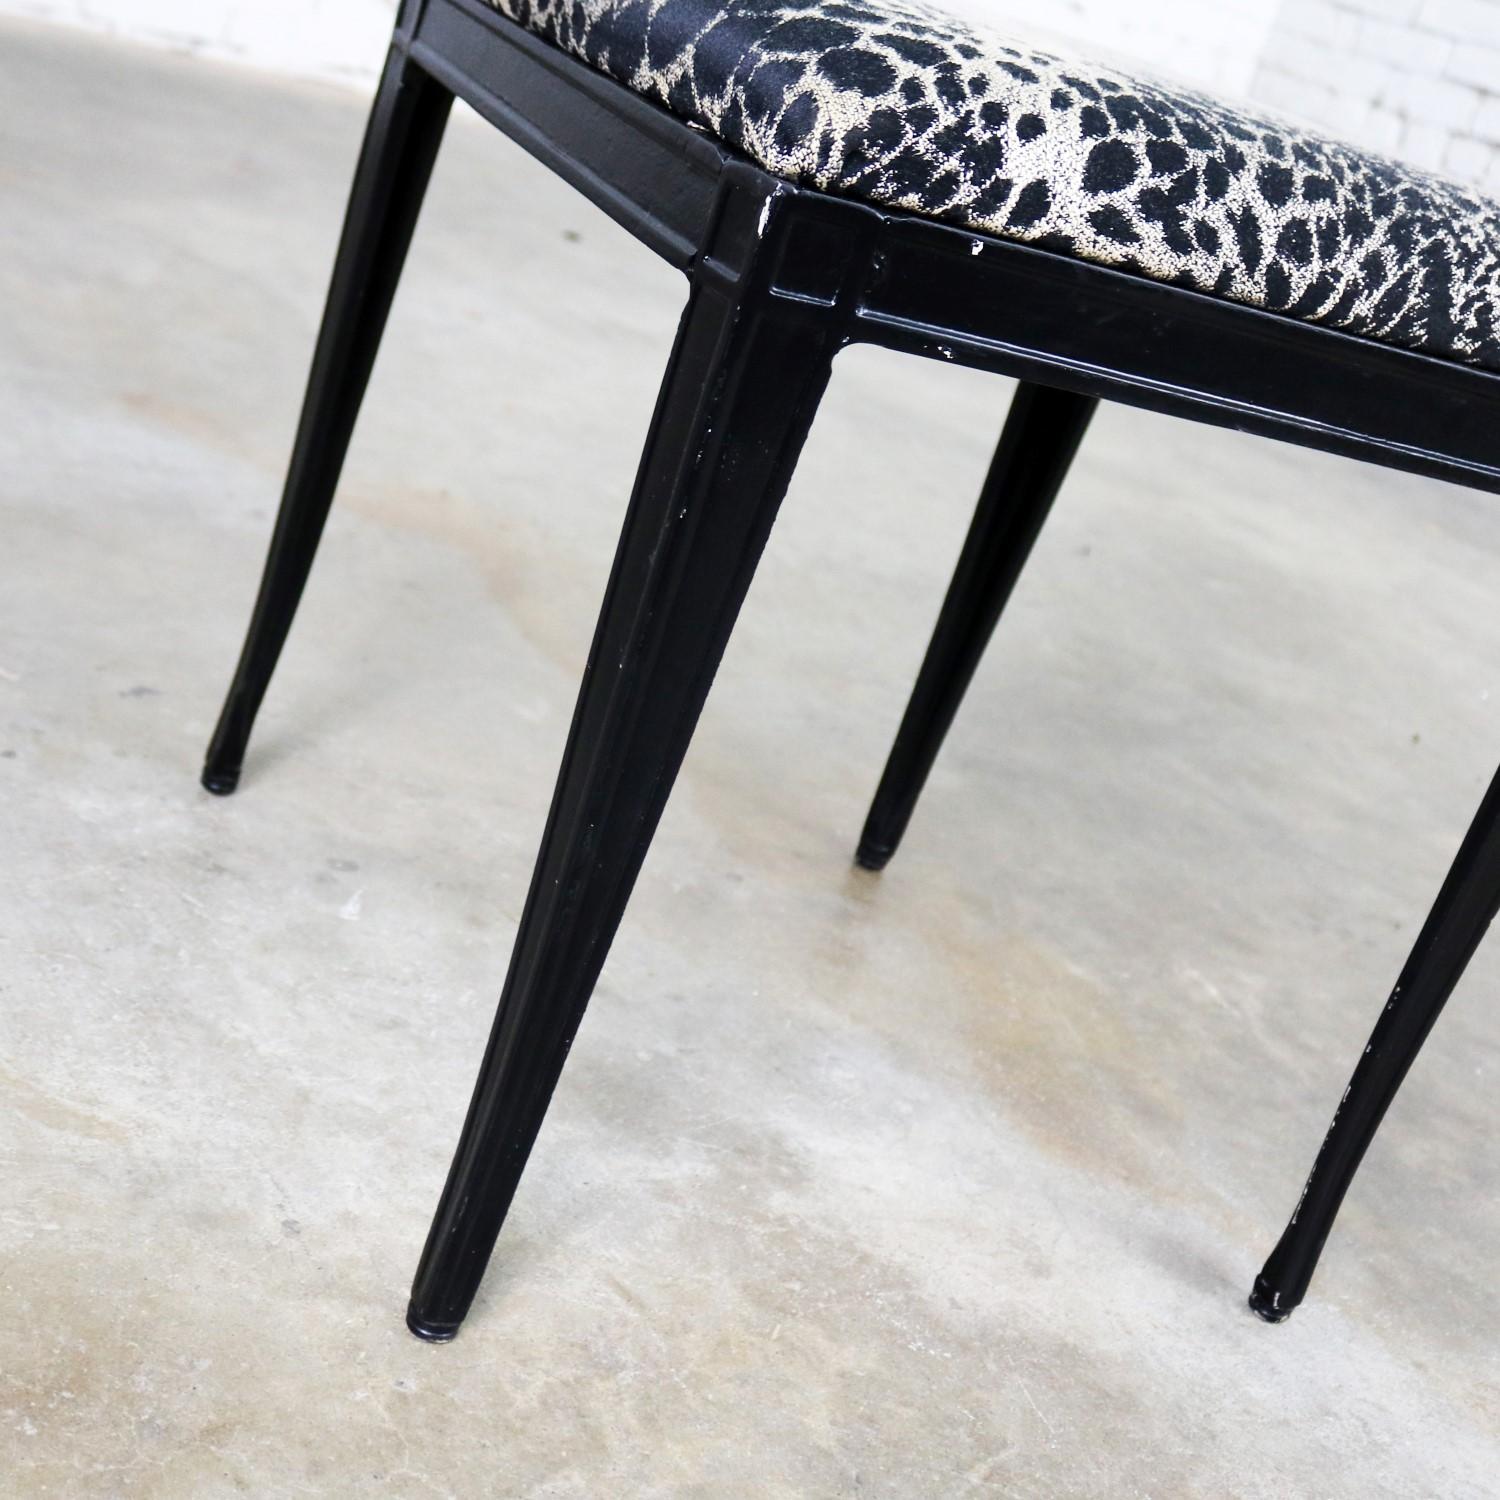 Black Art Deco and Animal Print Bench Ottoman Footstool Cast Aluminum by Crucibl 2